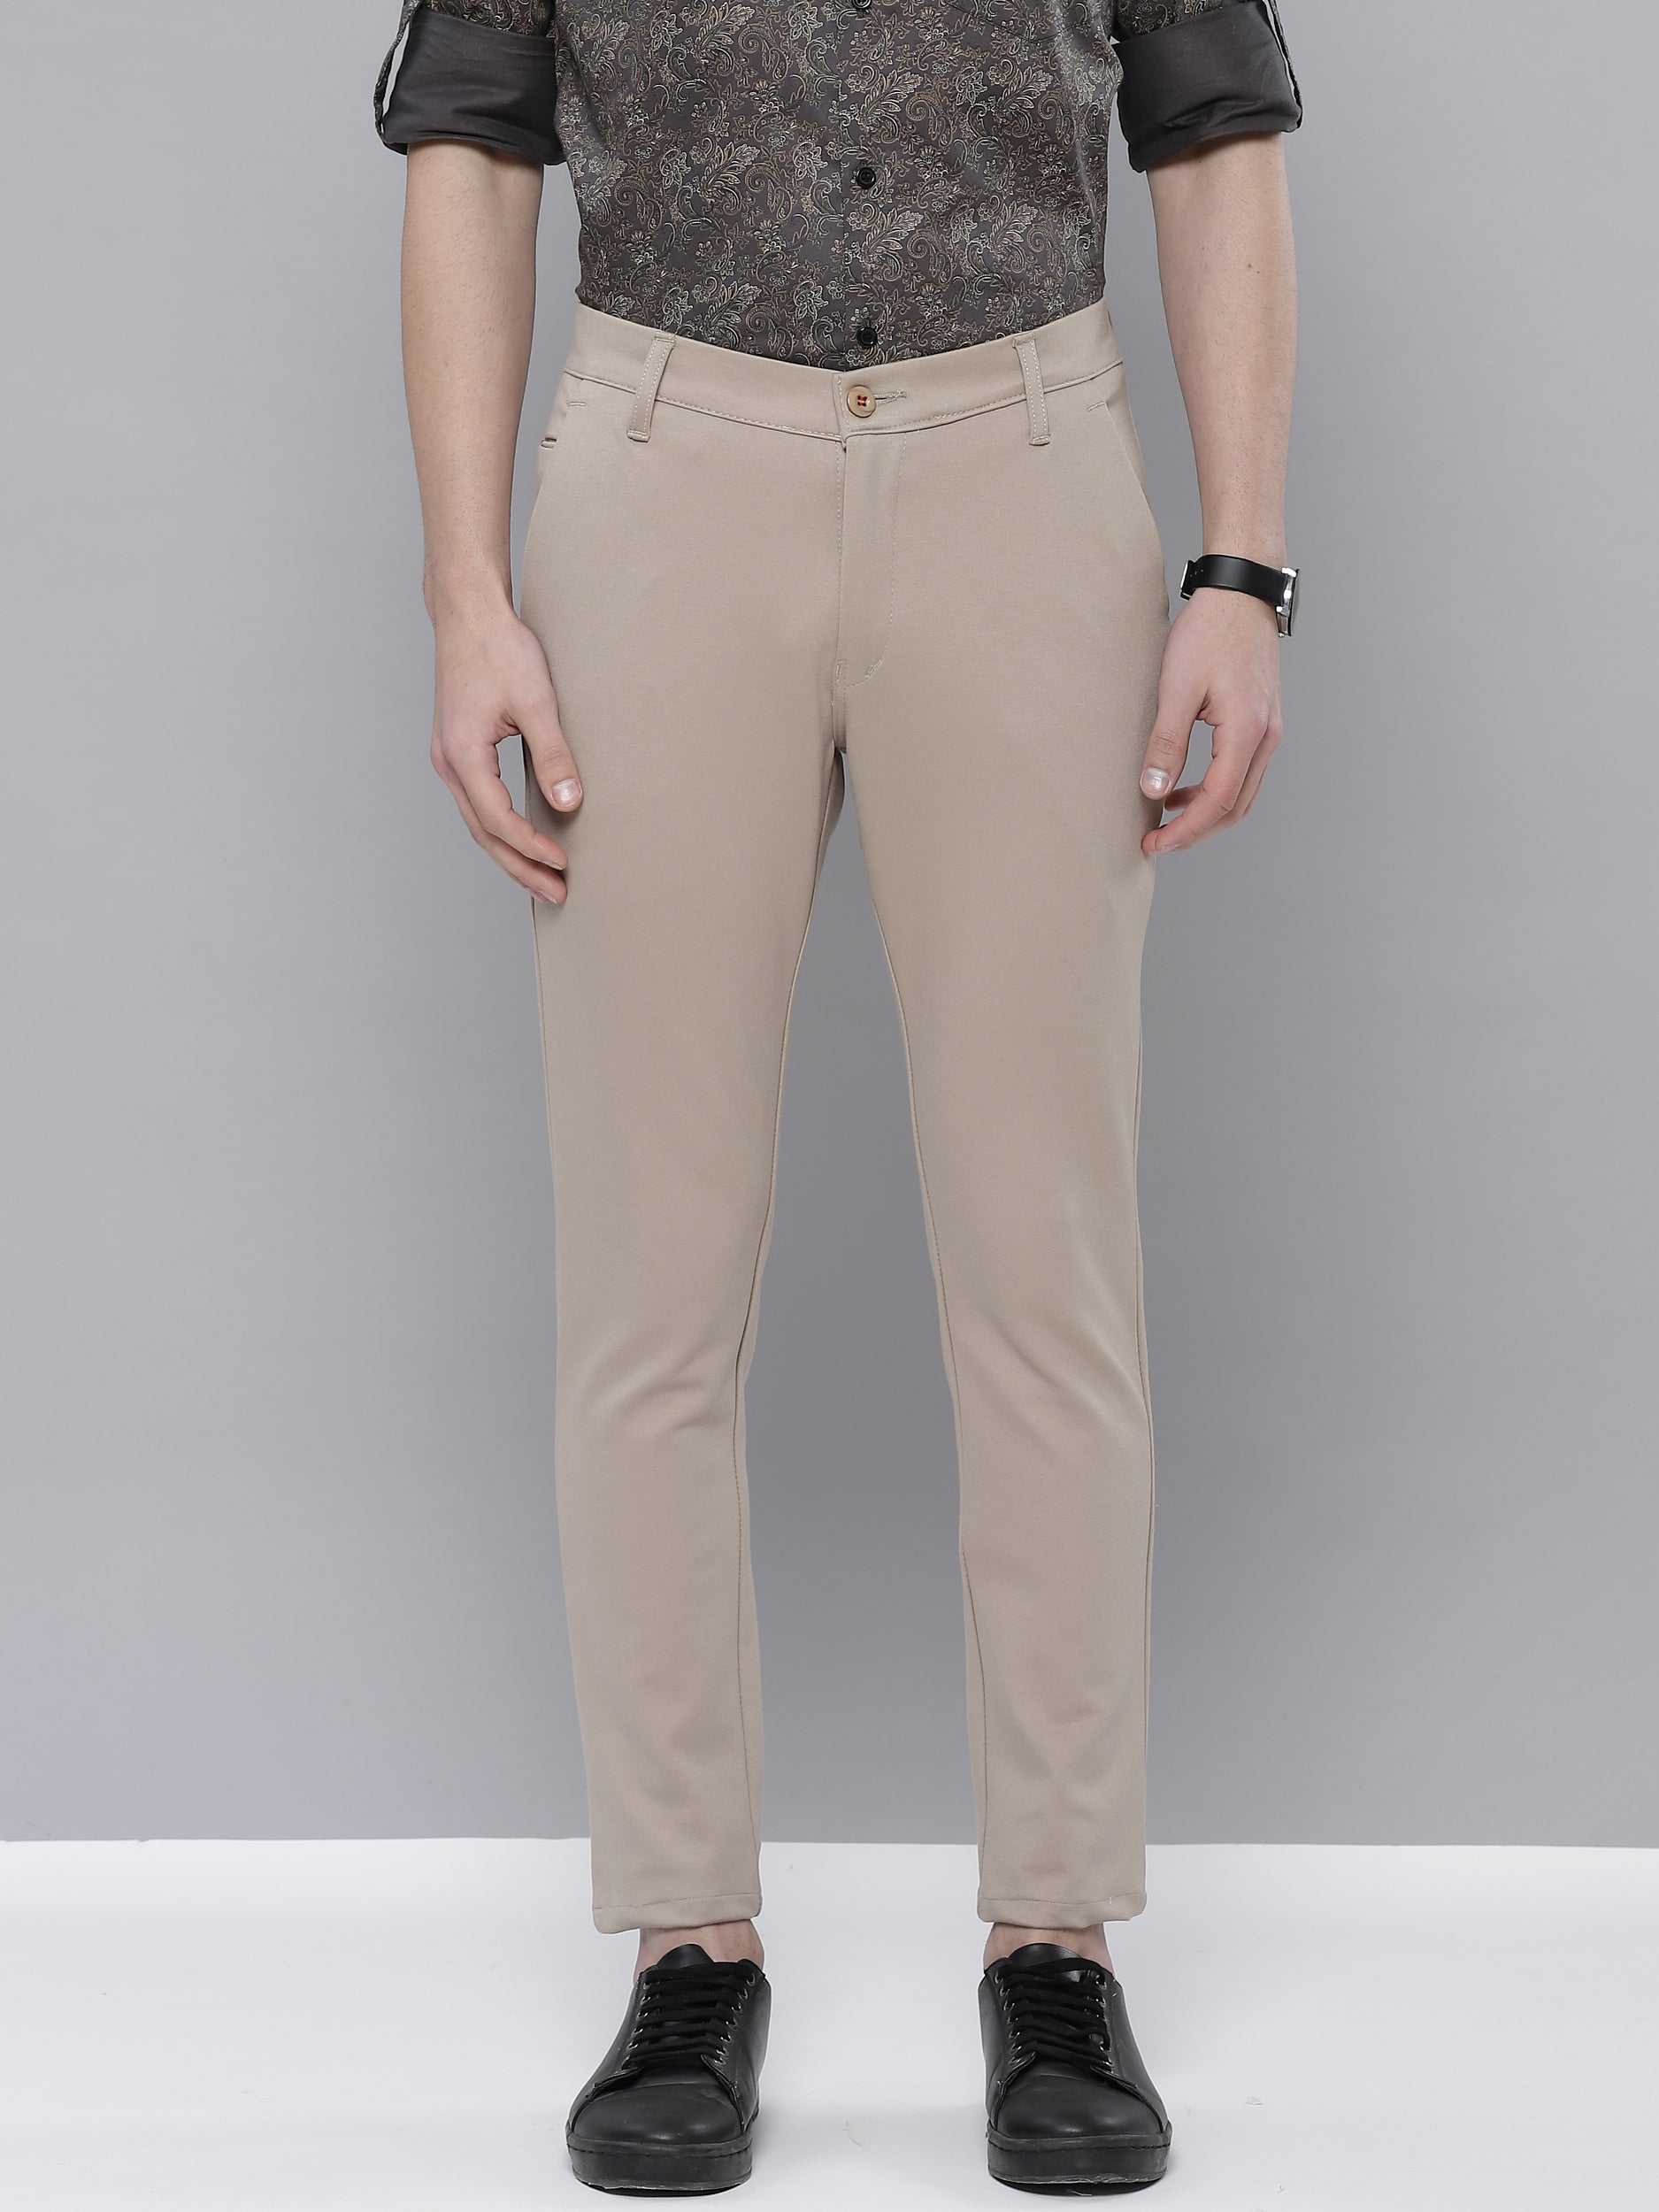 Orvis Wrinkle Free Pure Cotton Trousers Pants Men's 36 x 34 NEW Khaki | eBay